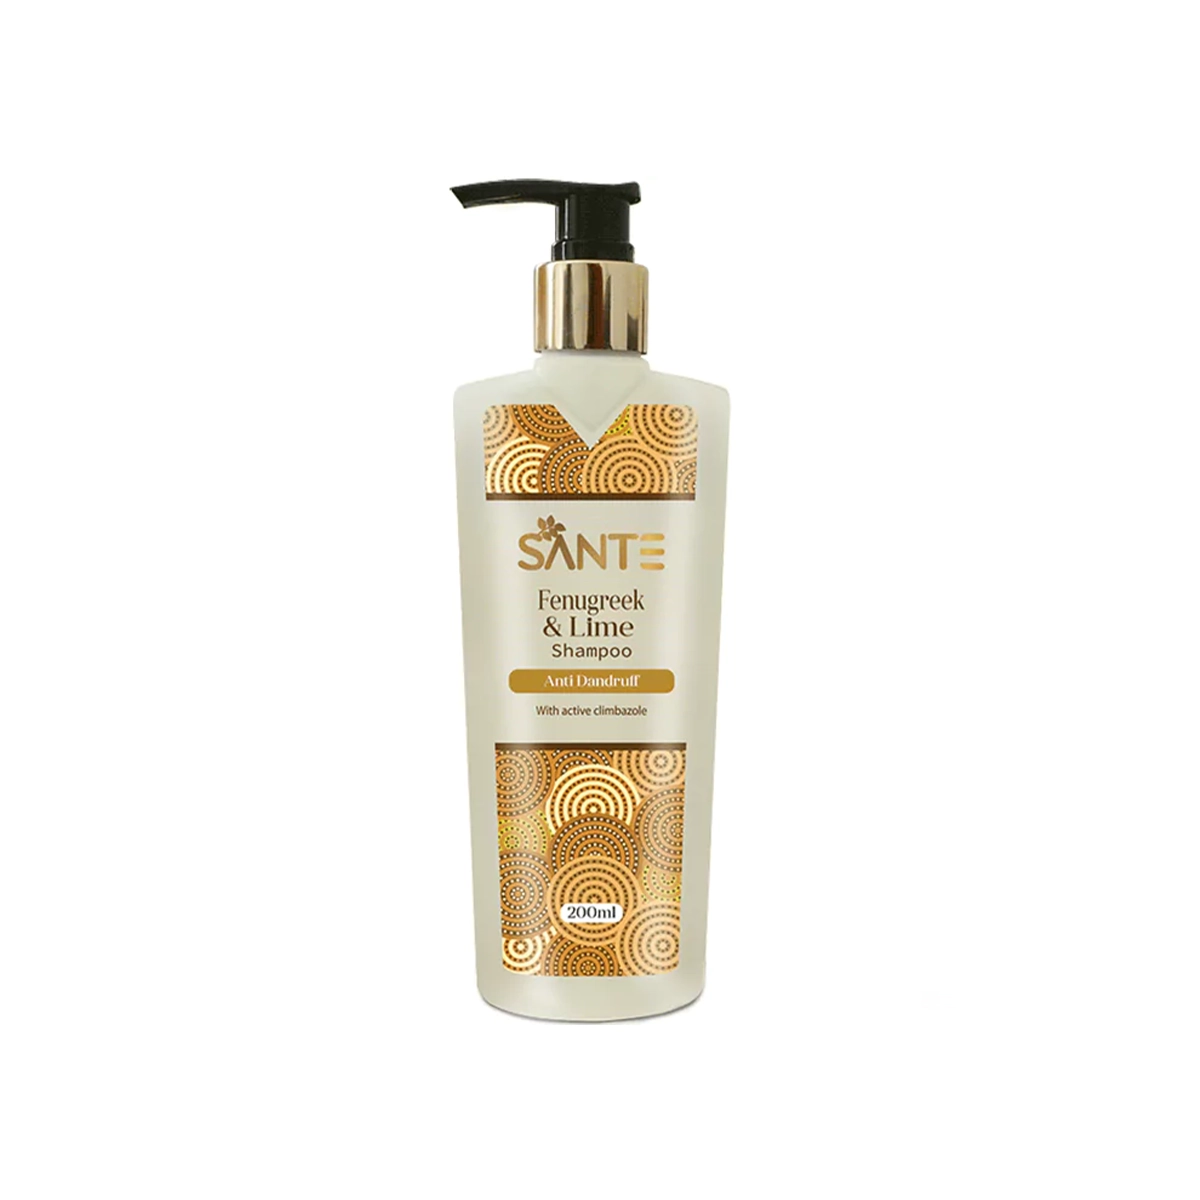 First product image of Sante Fenugreek & Lime (Anti Dandruff) Shampo 200ml